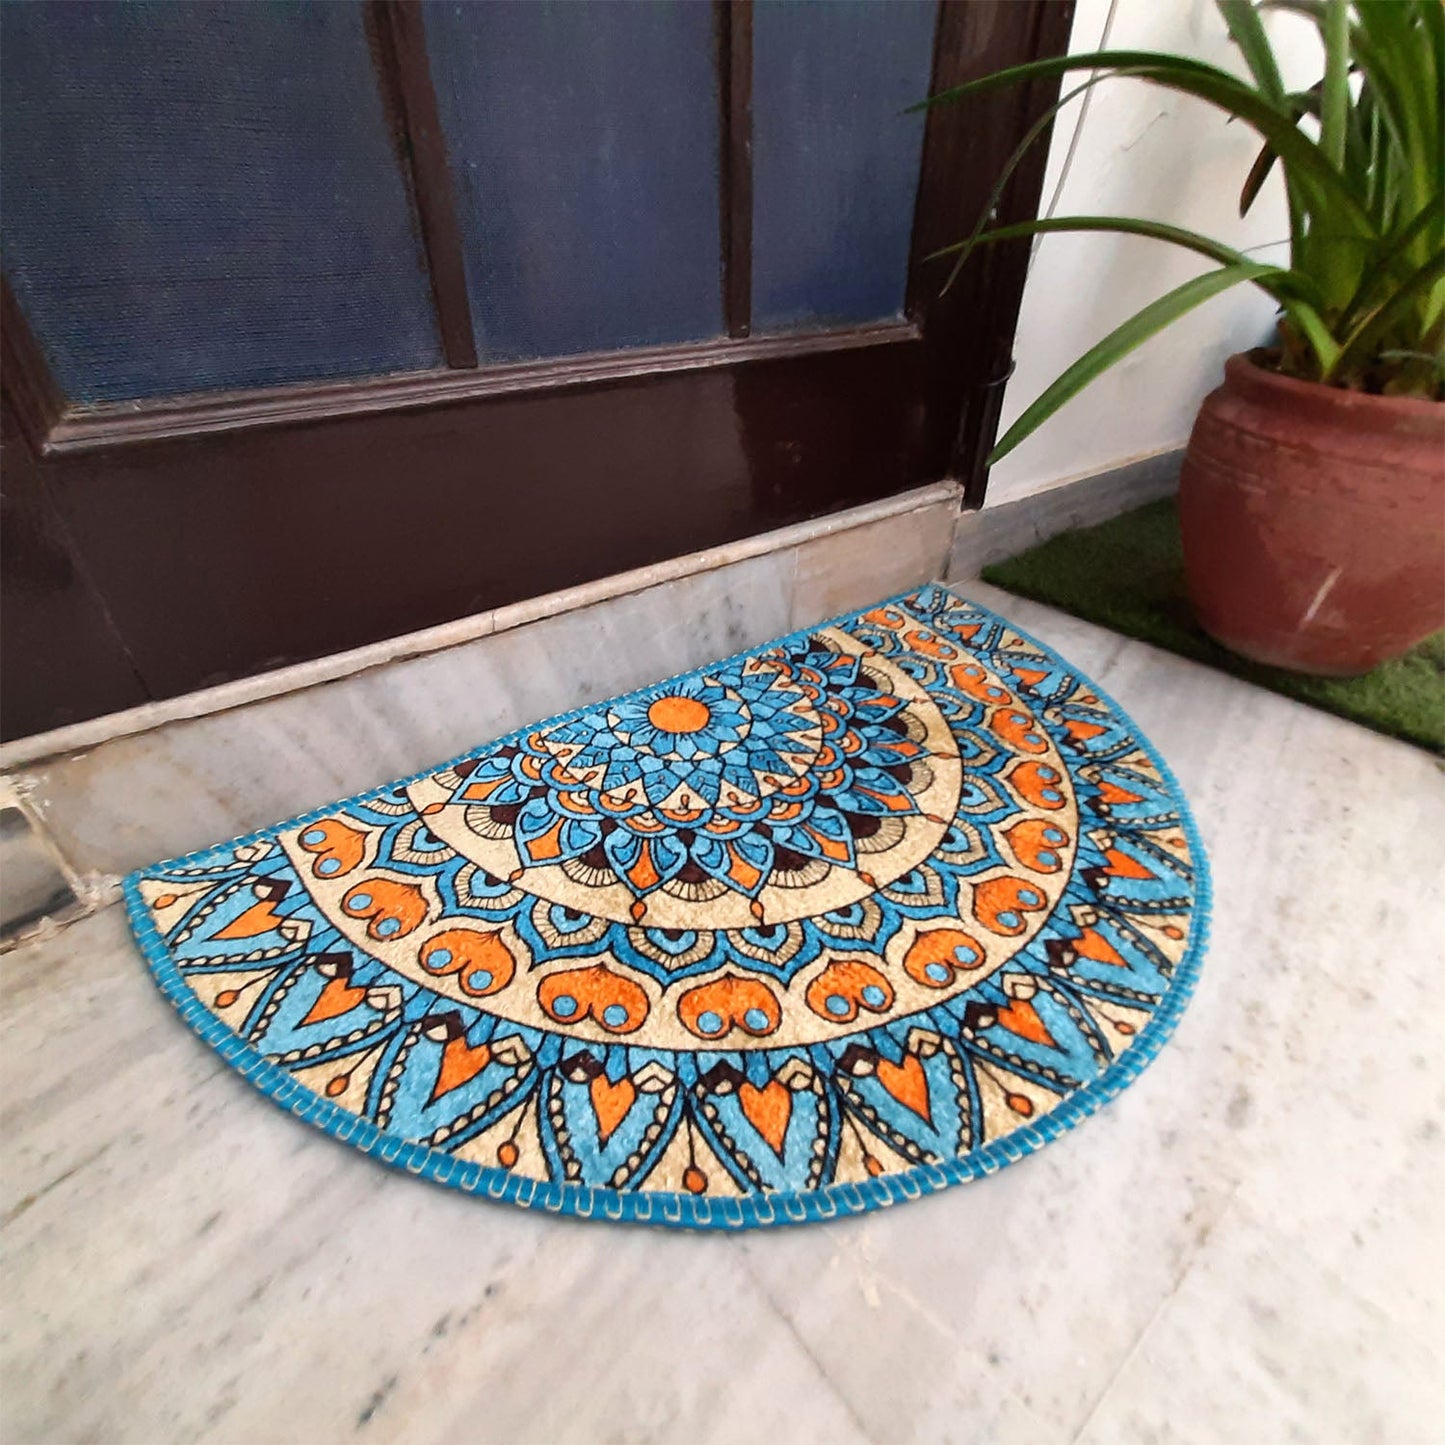 Avioni Home Floor Mats in Beautiful Blue Tone Rangoli Design | Half Circle Rugs | Anti Slip, Durable & Washable | Outdoor & Indoor